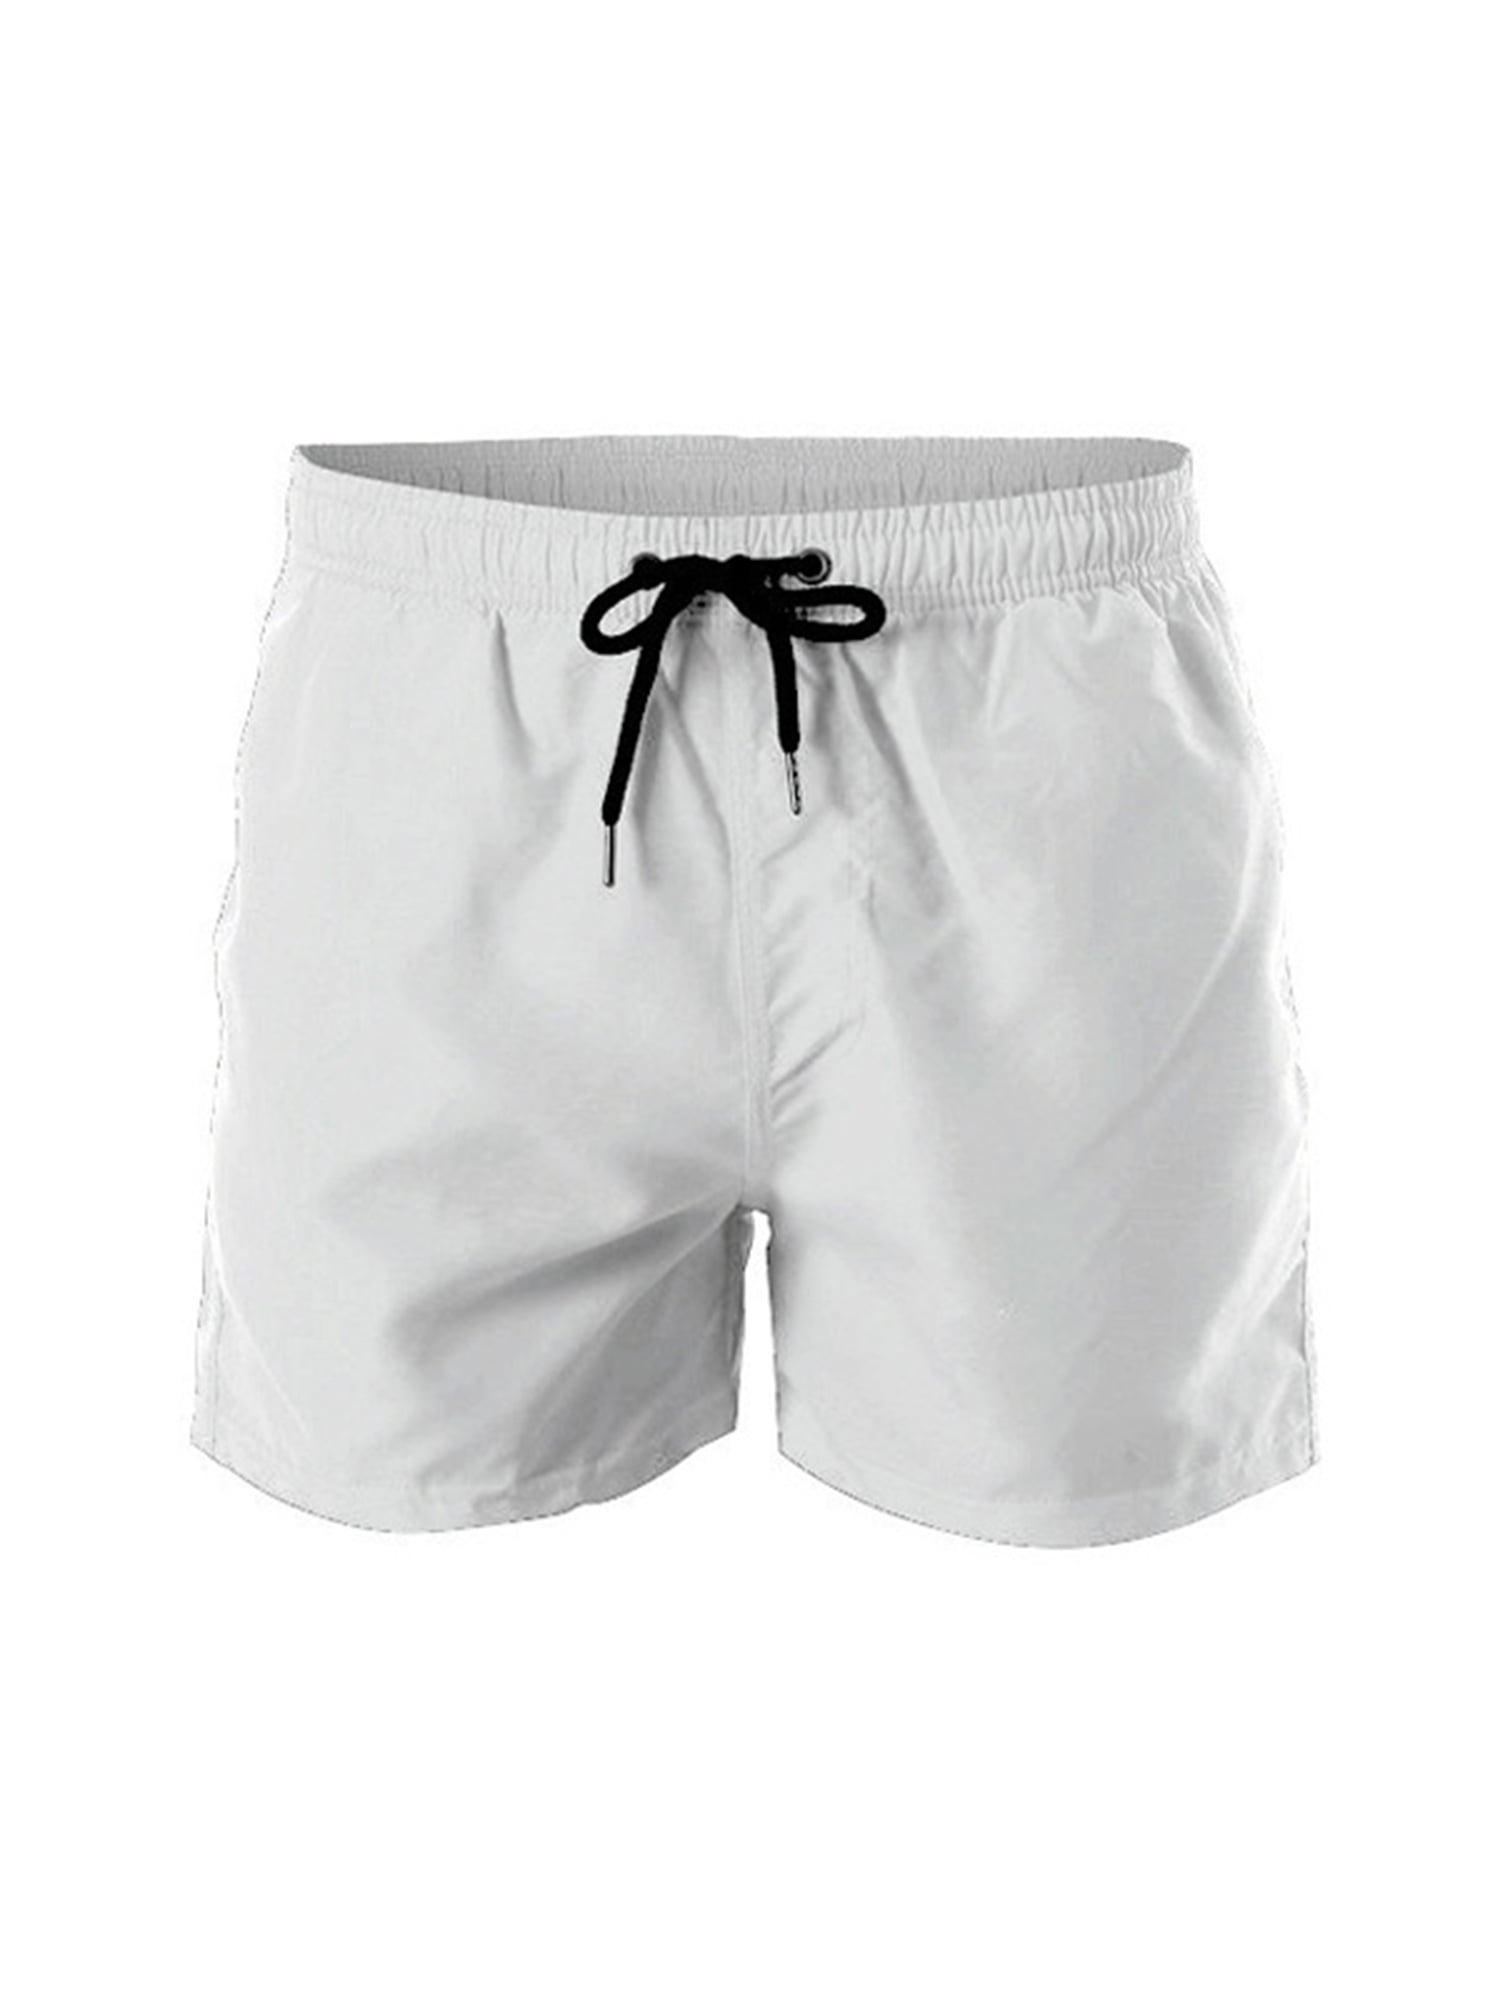 Moschino Synthetic Swim Trunks in White for Men Mens Clothing Beachwear Swim trunks and swim shorts 